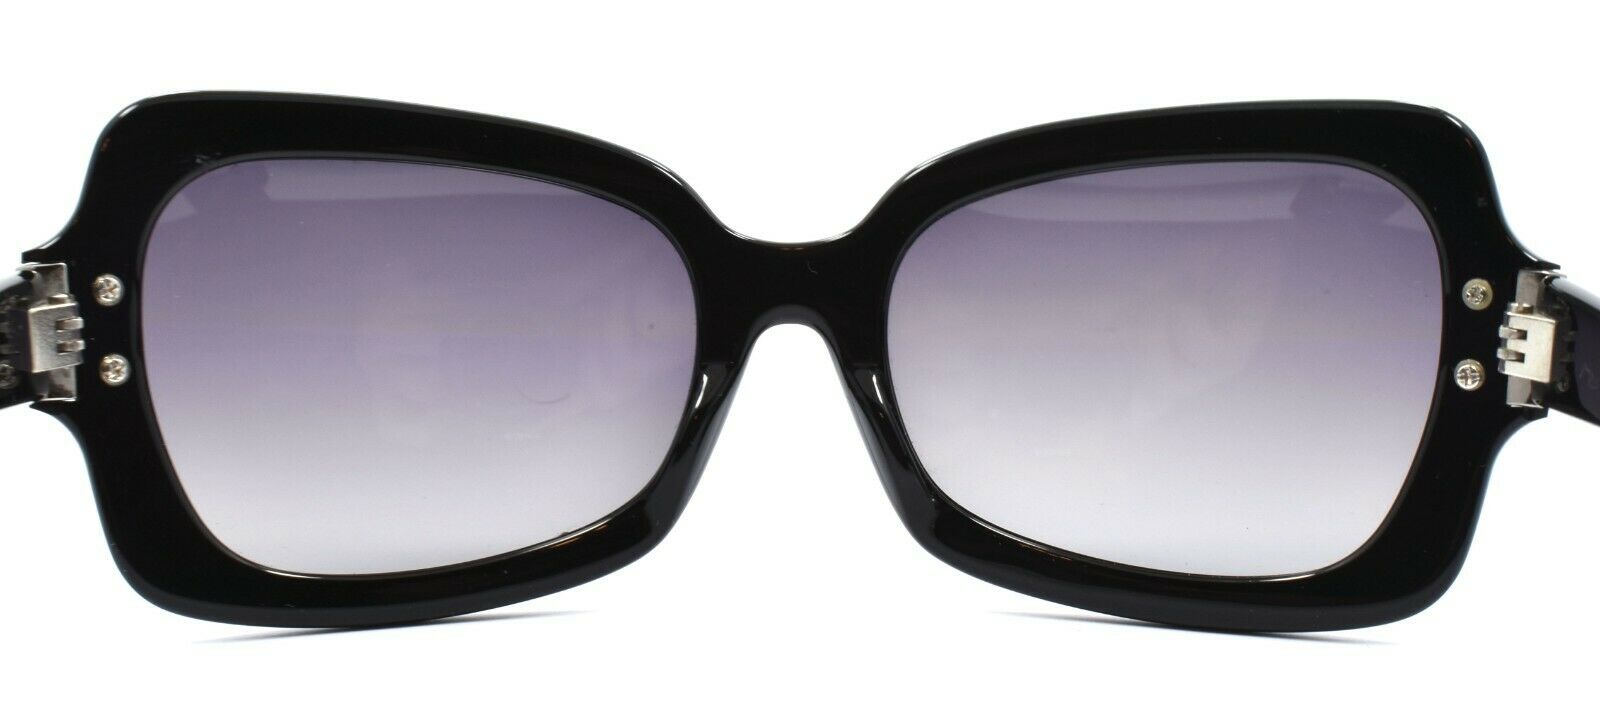 4-Oliver Peoples Vilette BK/S Women's Sunglasses Black / Violet Polarized JAPAN-Does not apply-IKSpecs